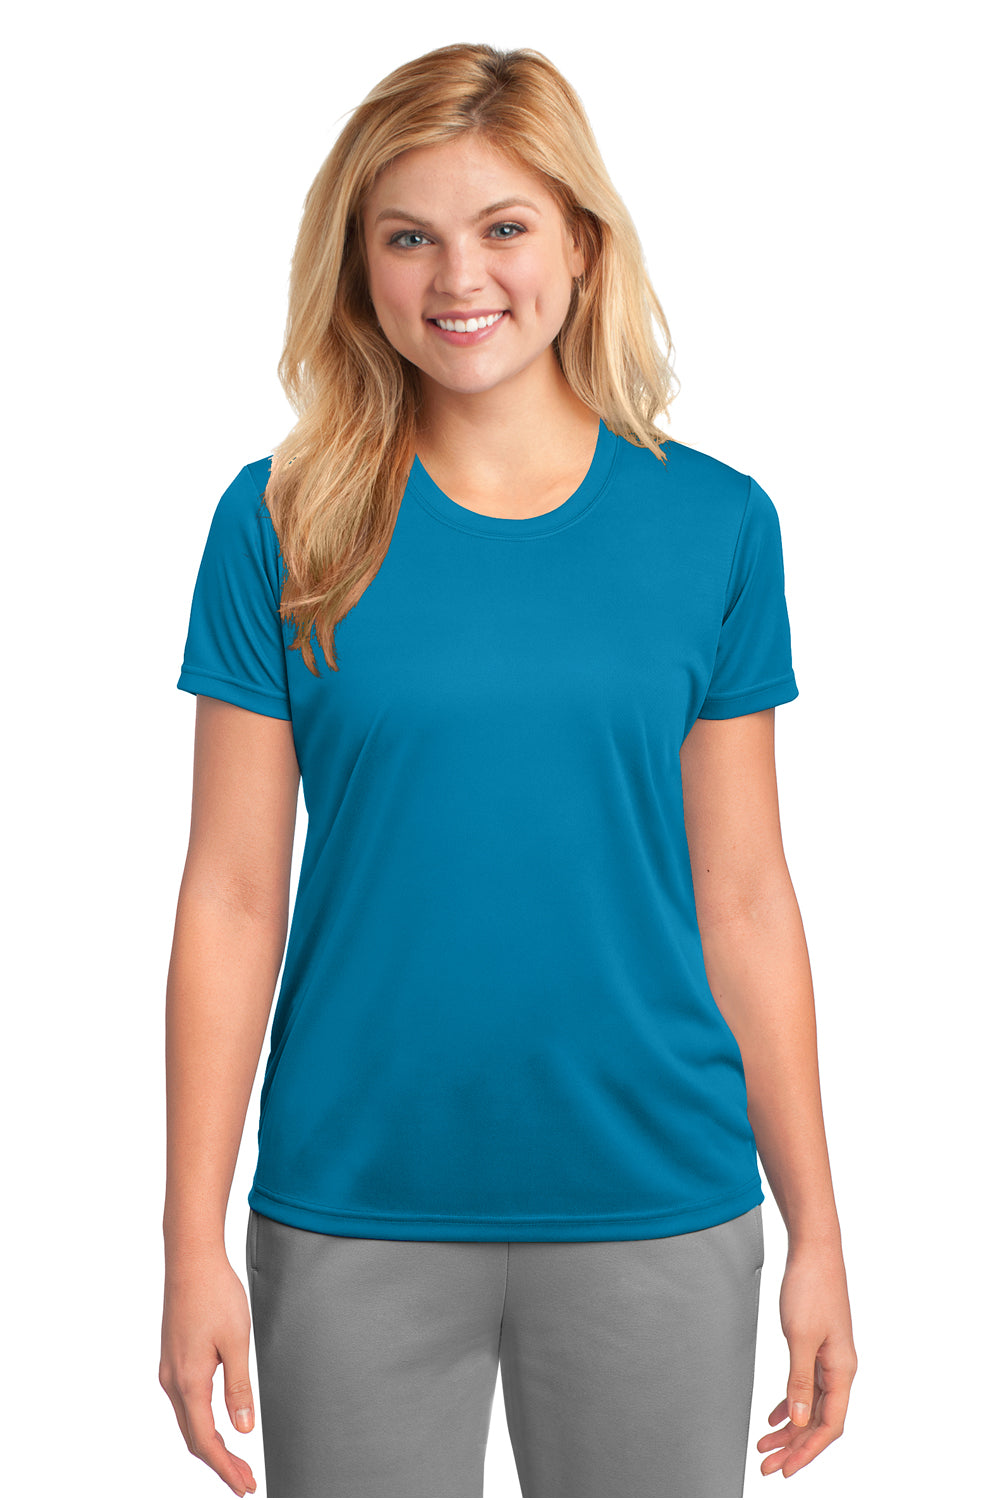 Port & Company LPC380 Womens Dry Zone Performance Moisture Wicking Short Sleeve Crewneck T-Shirt Neon Blue Front